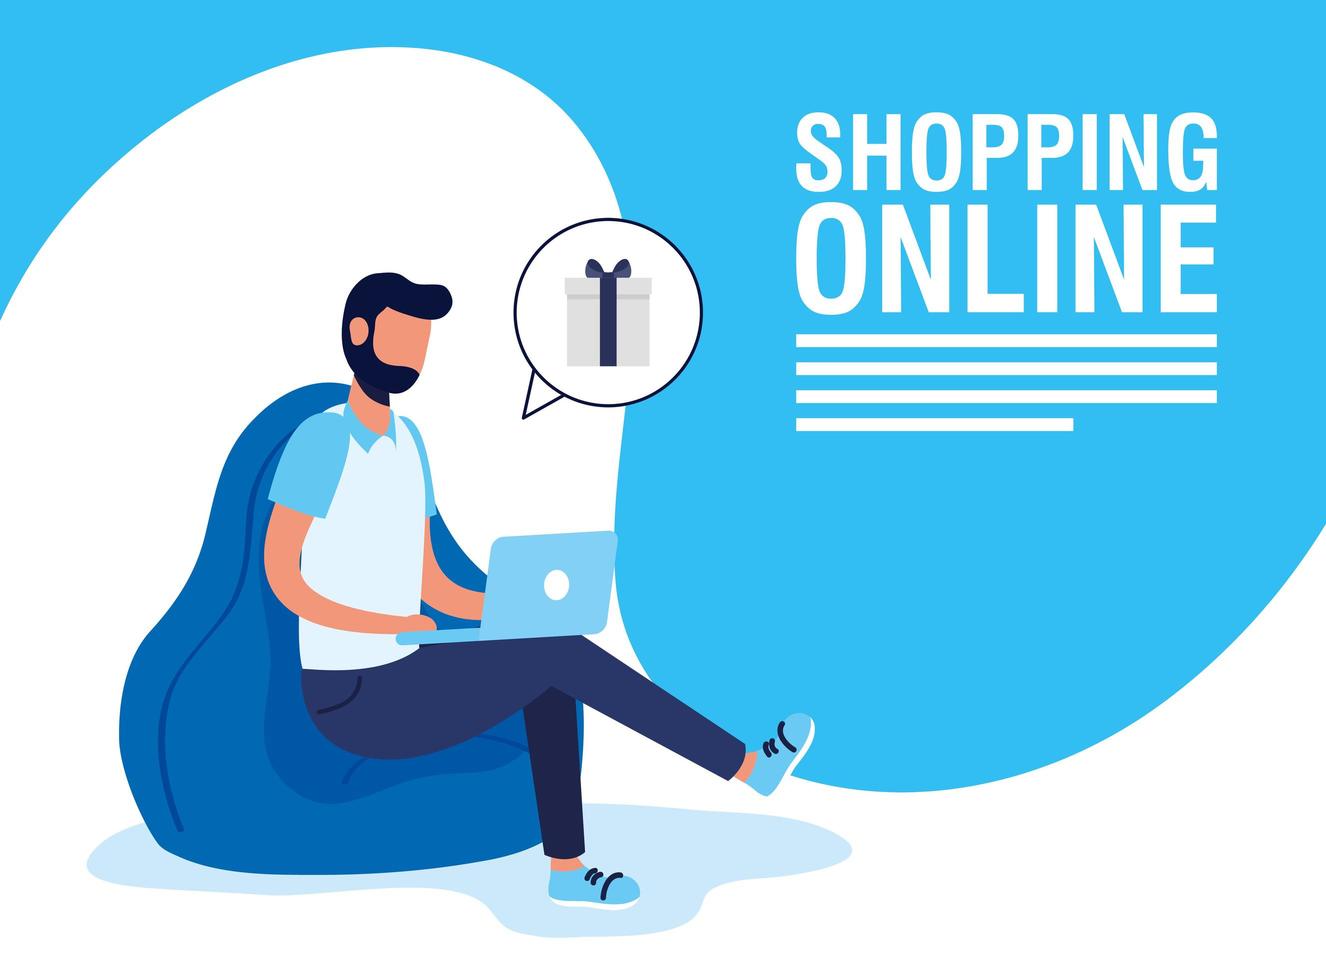 banner de compras online e e-commerce vetor